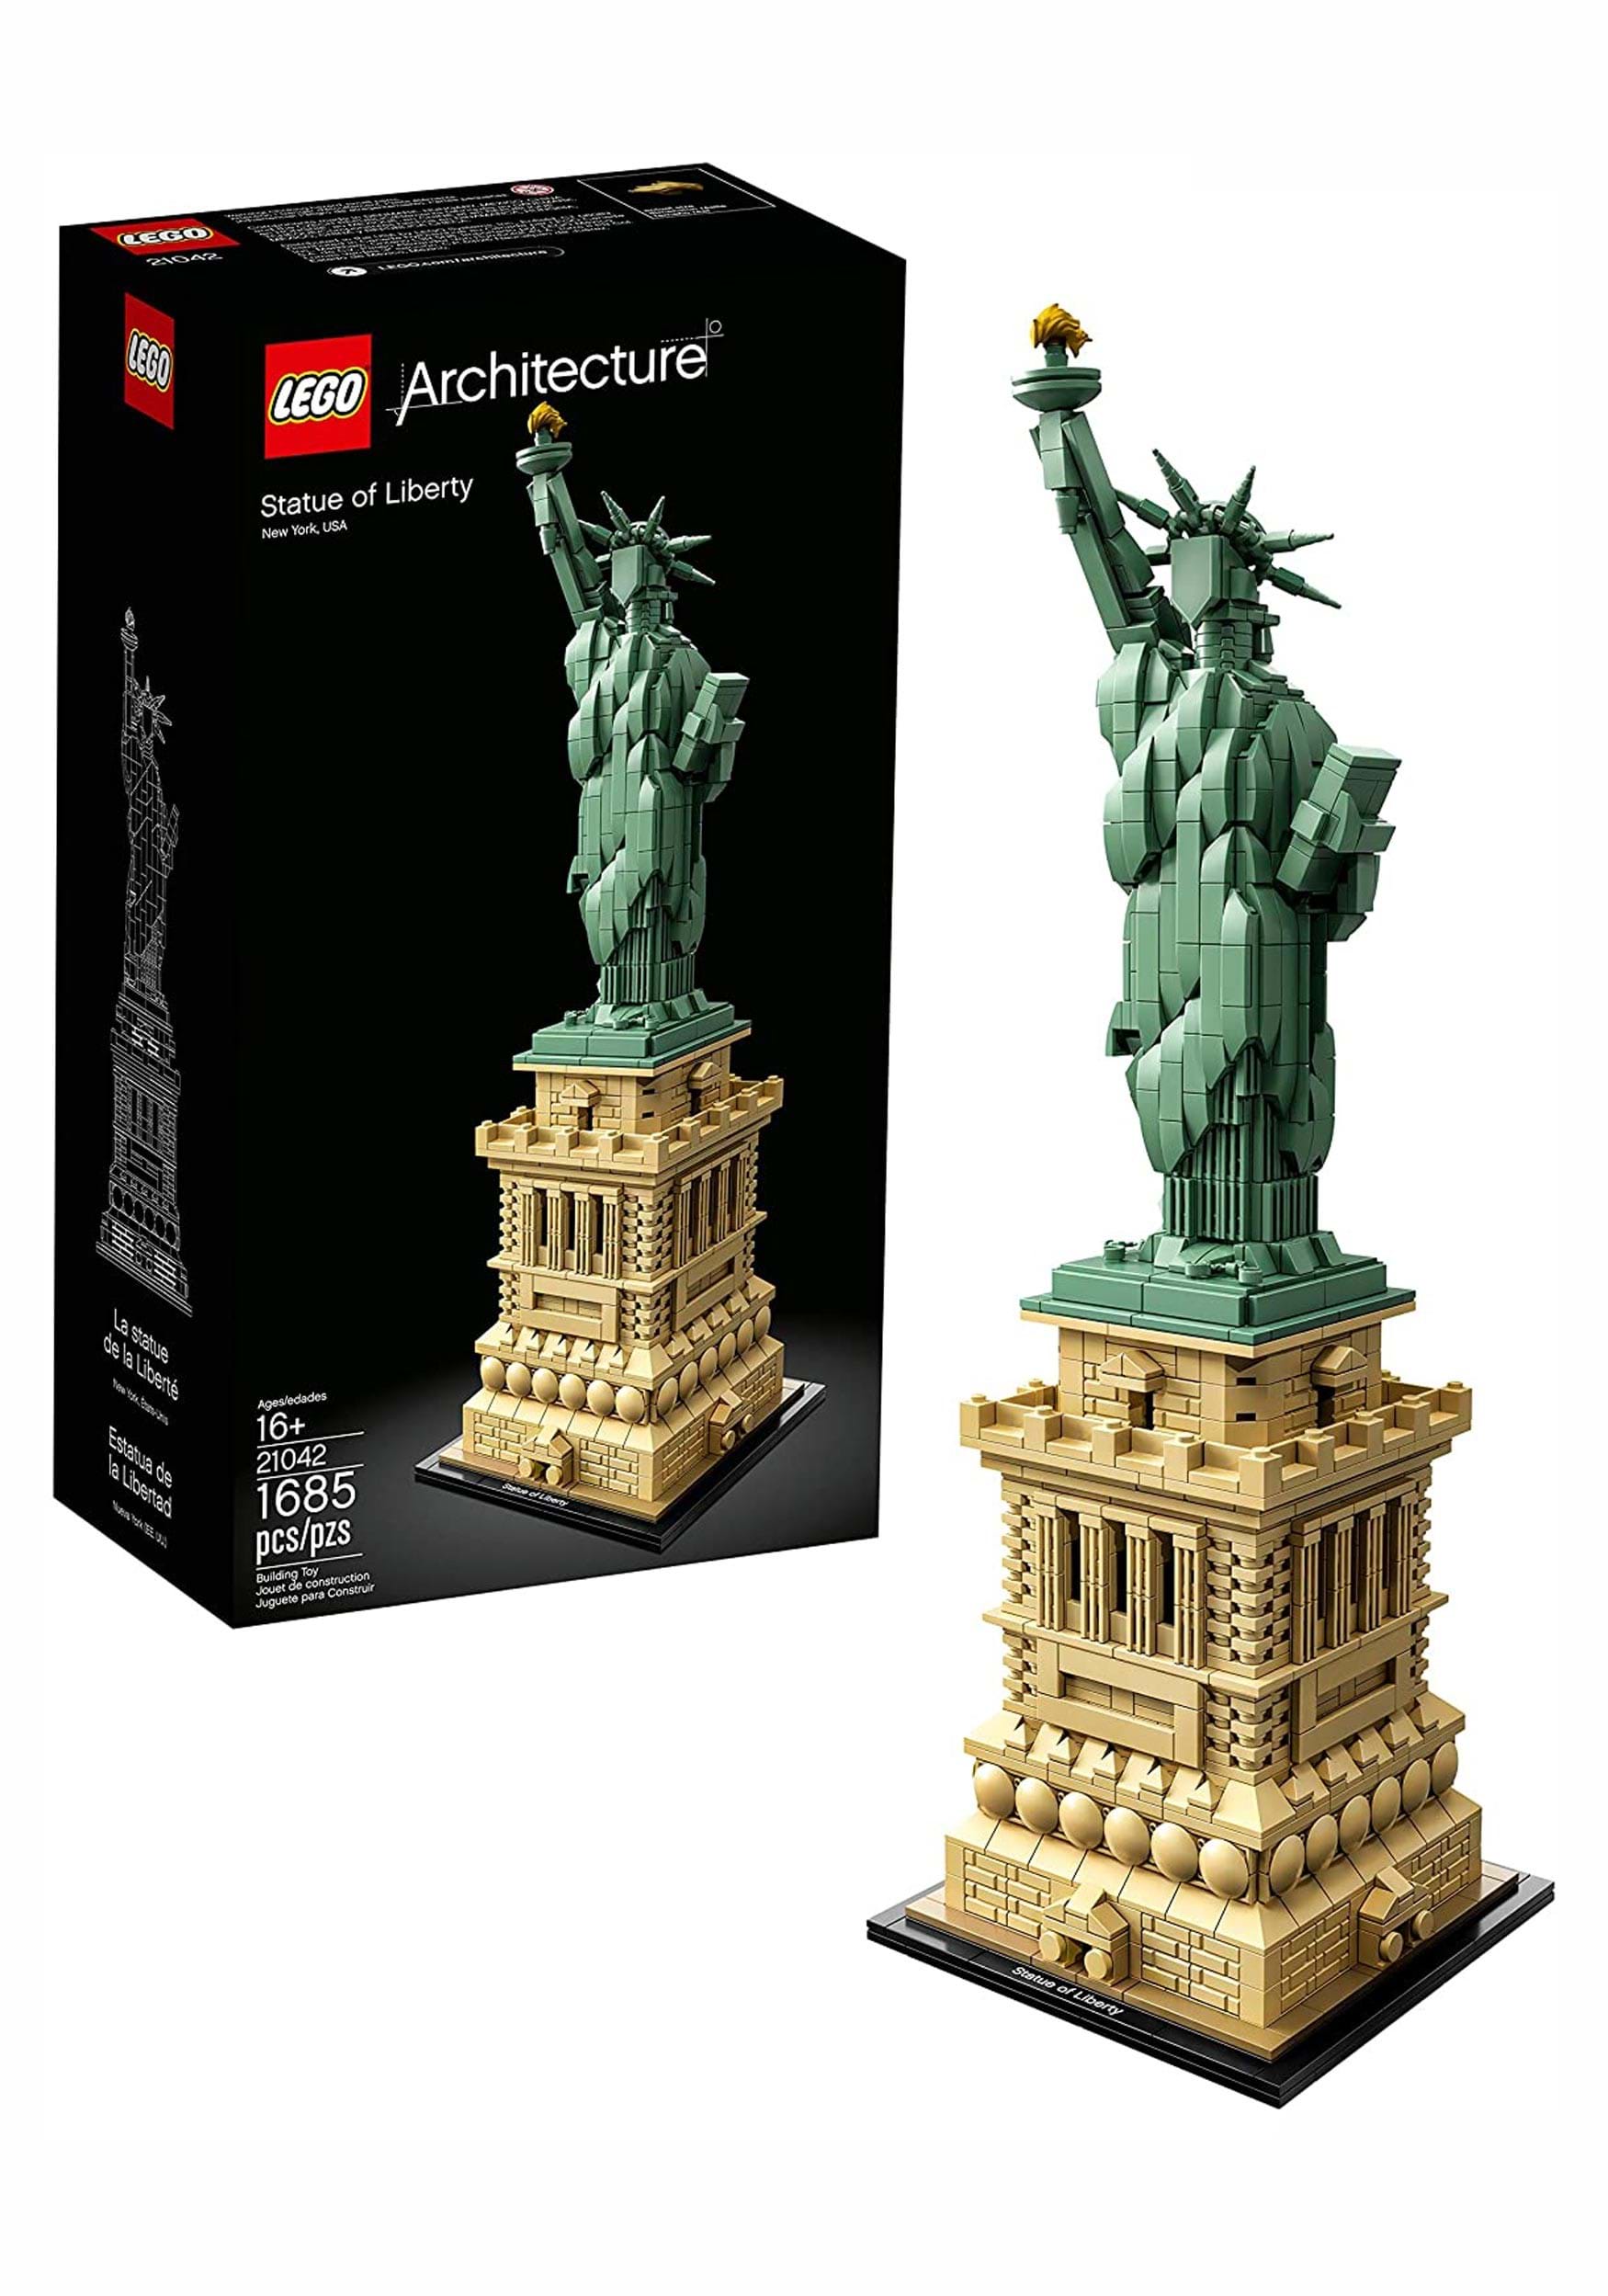 LEGO Statue of Liberty Architecture